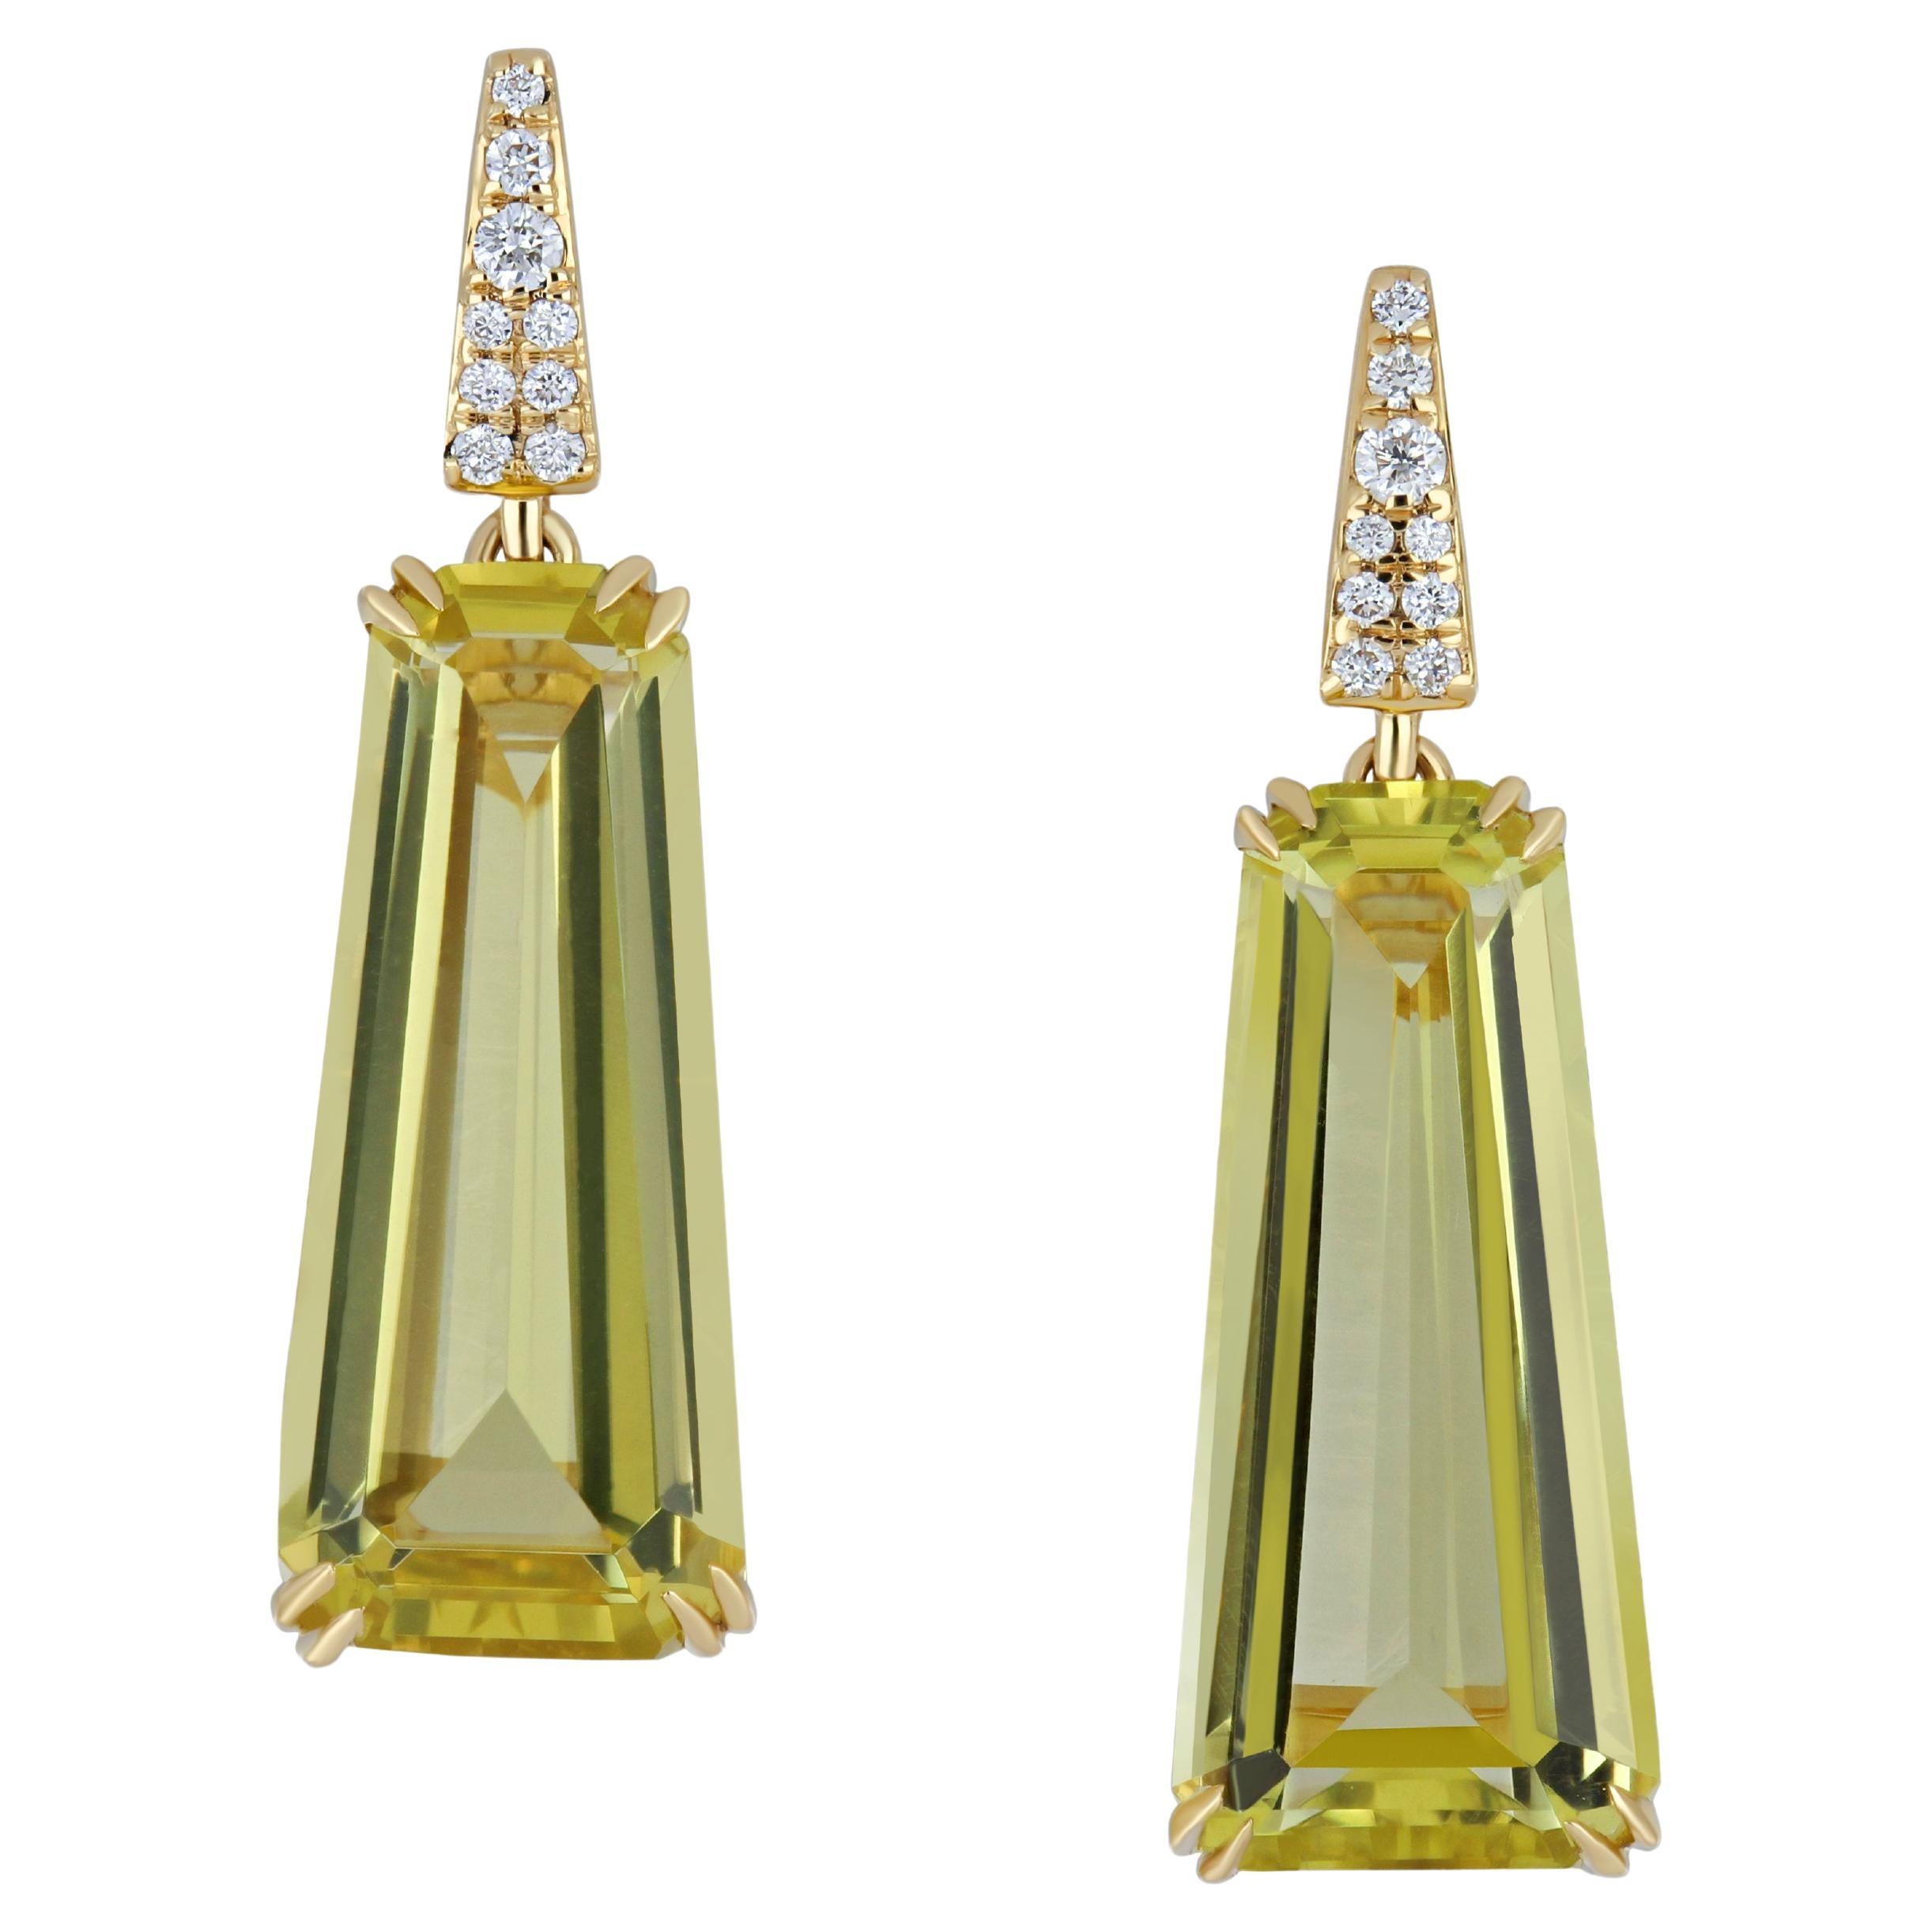 Exquisite 10.0 cts Lemon Quartz & Diamond Earrings, Handcrafted in 18K Gold